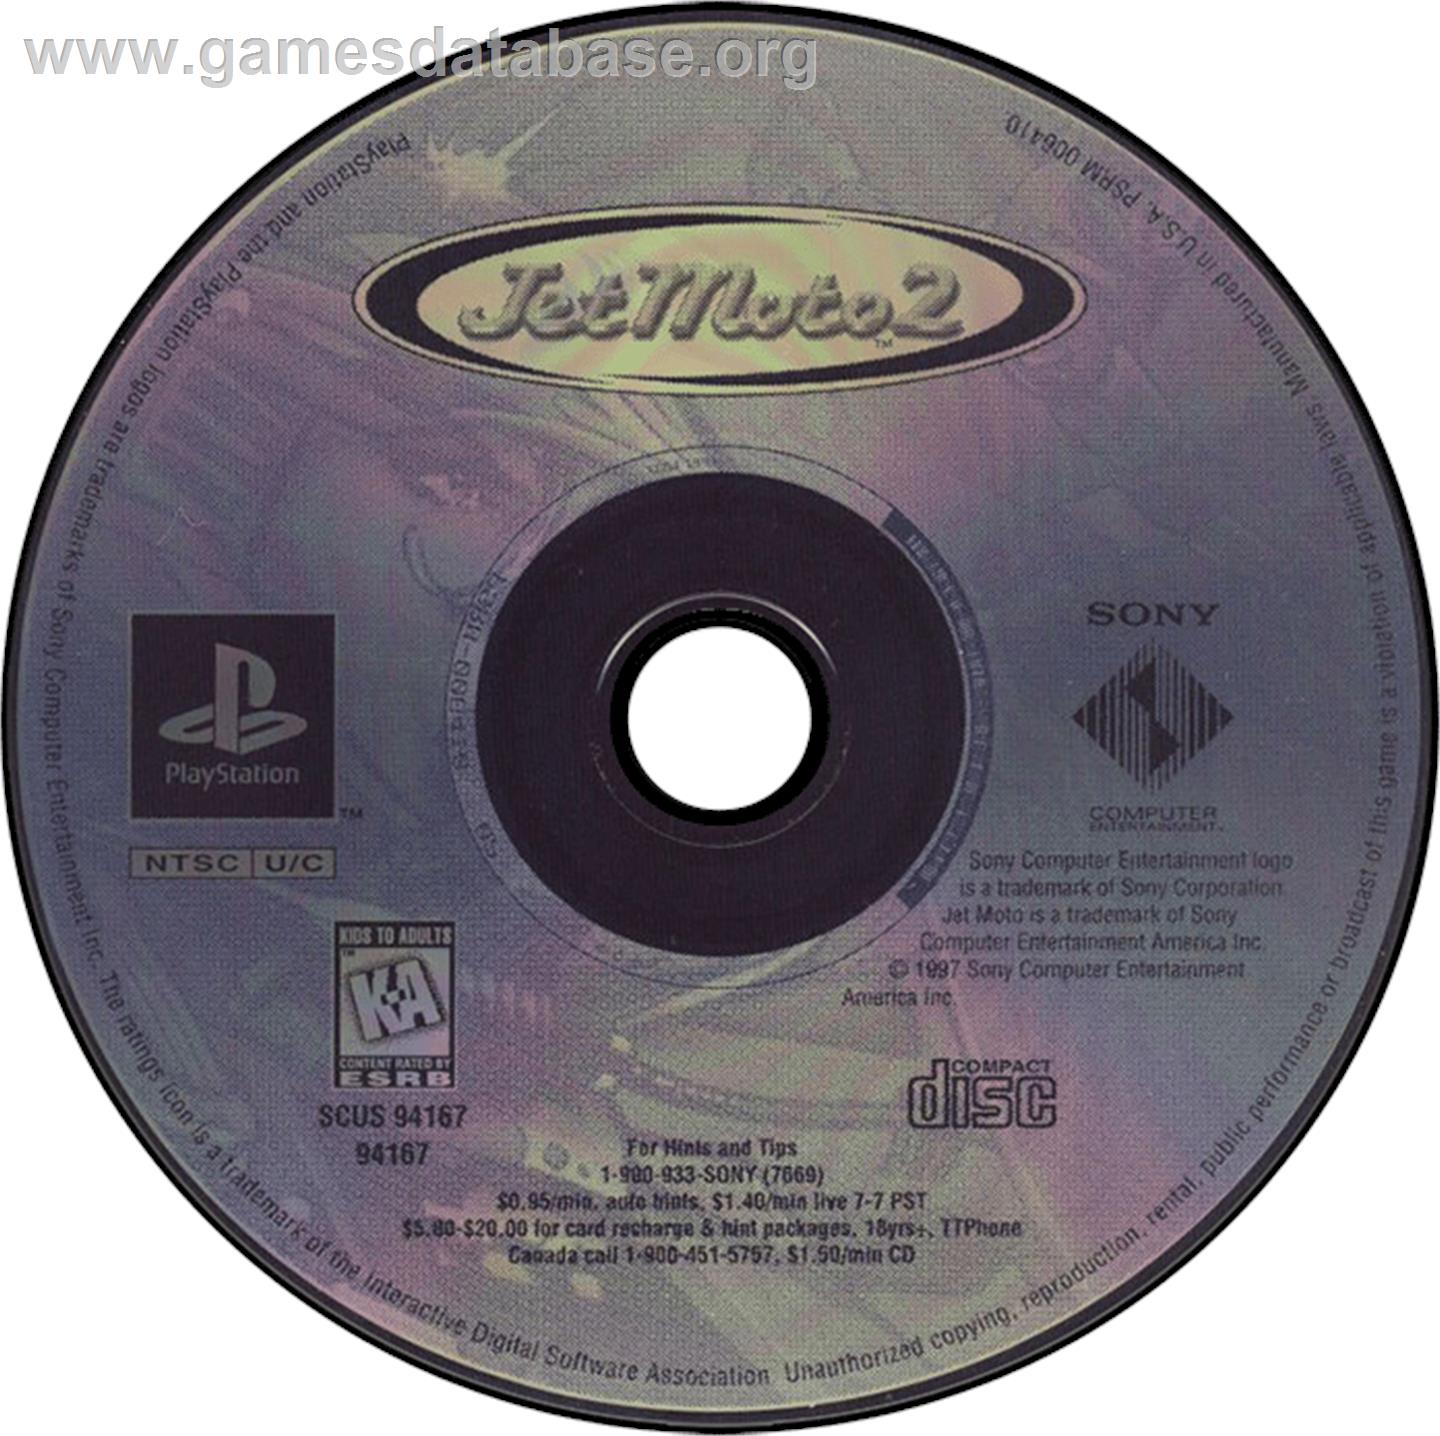 Jet Moto 2 - Sony Playstation - Artwork - Disc